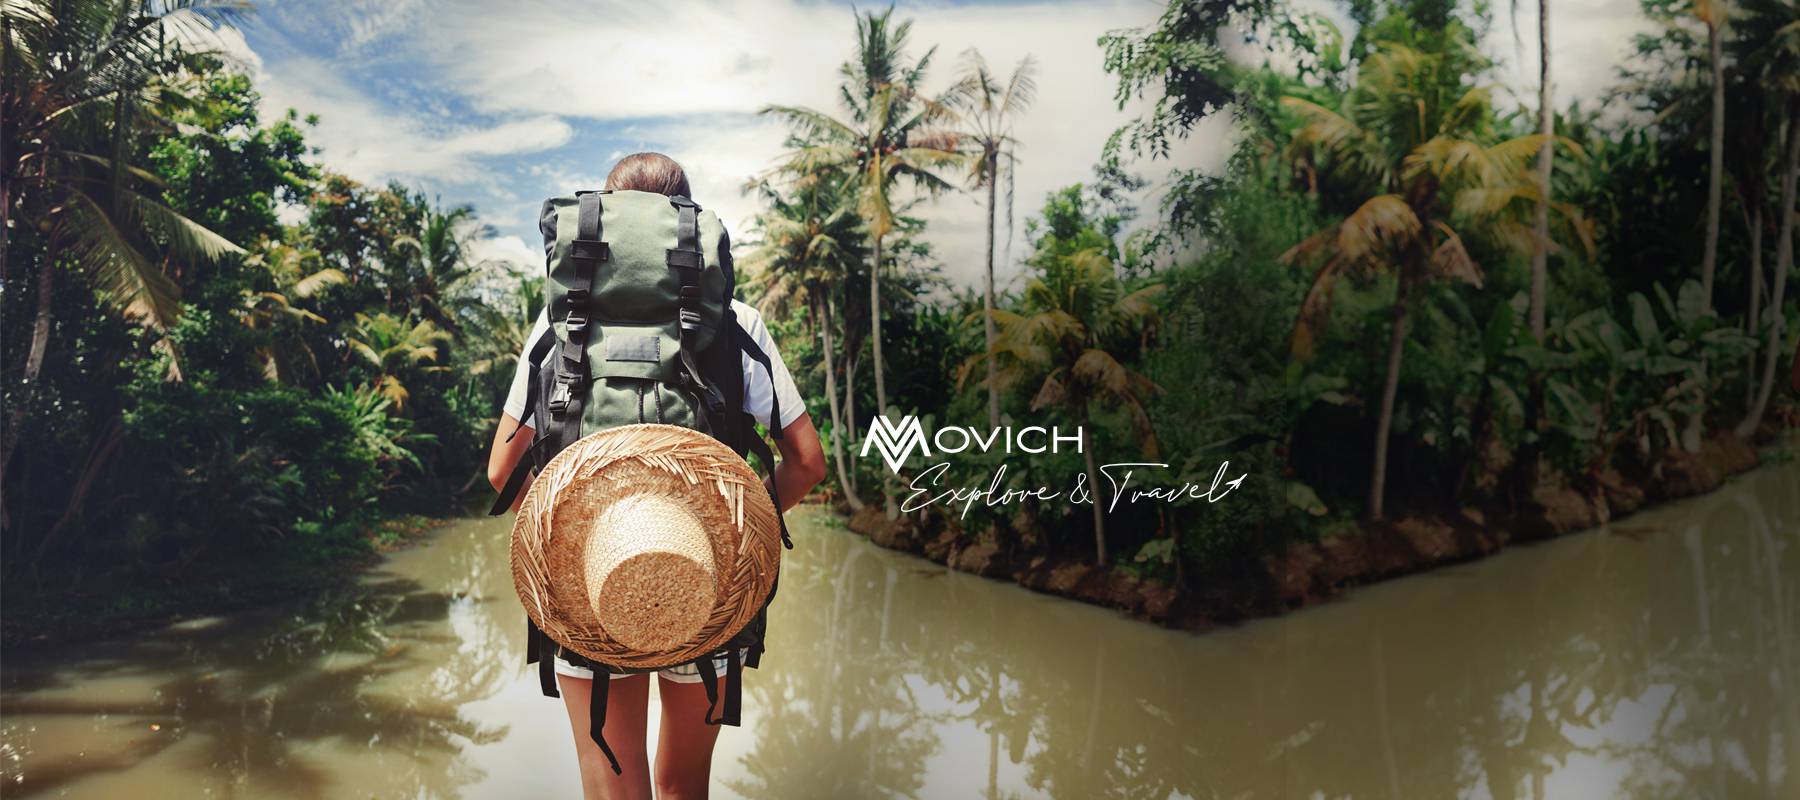 Explore & Travel Movich Hotels